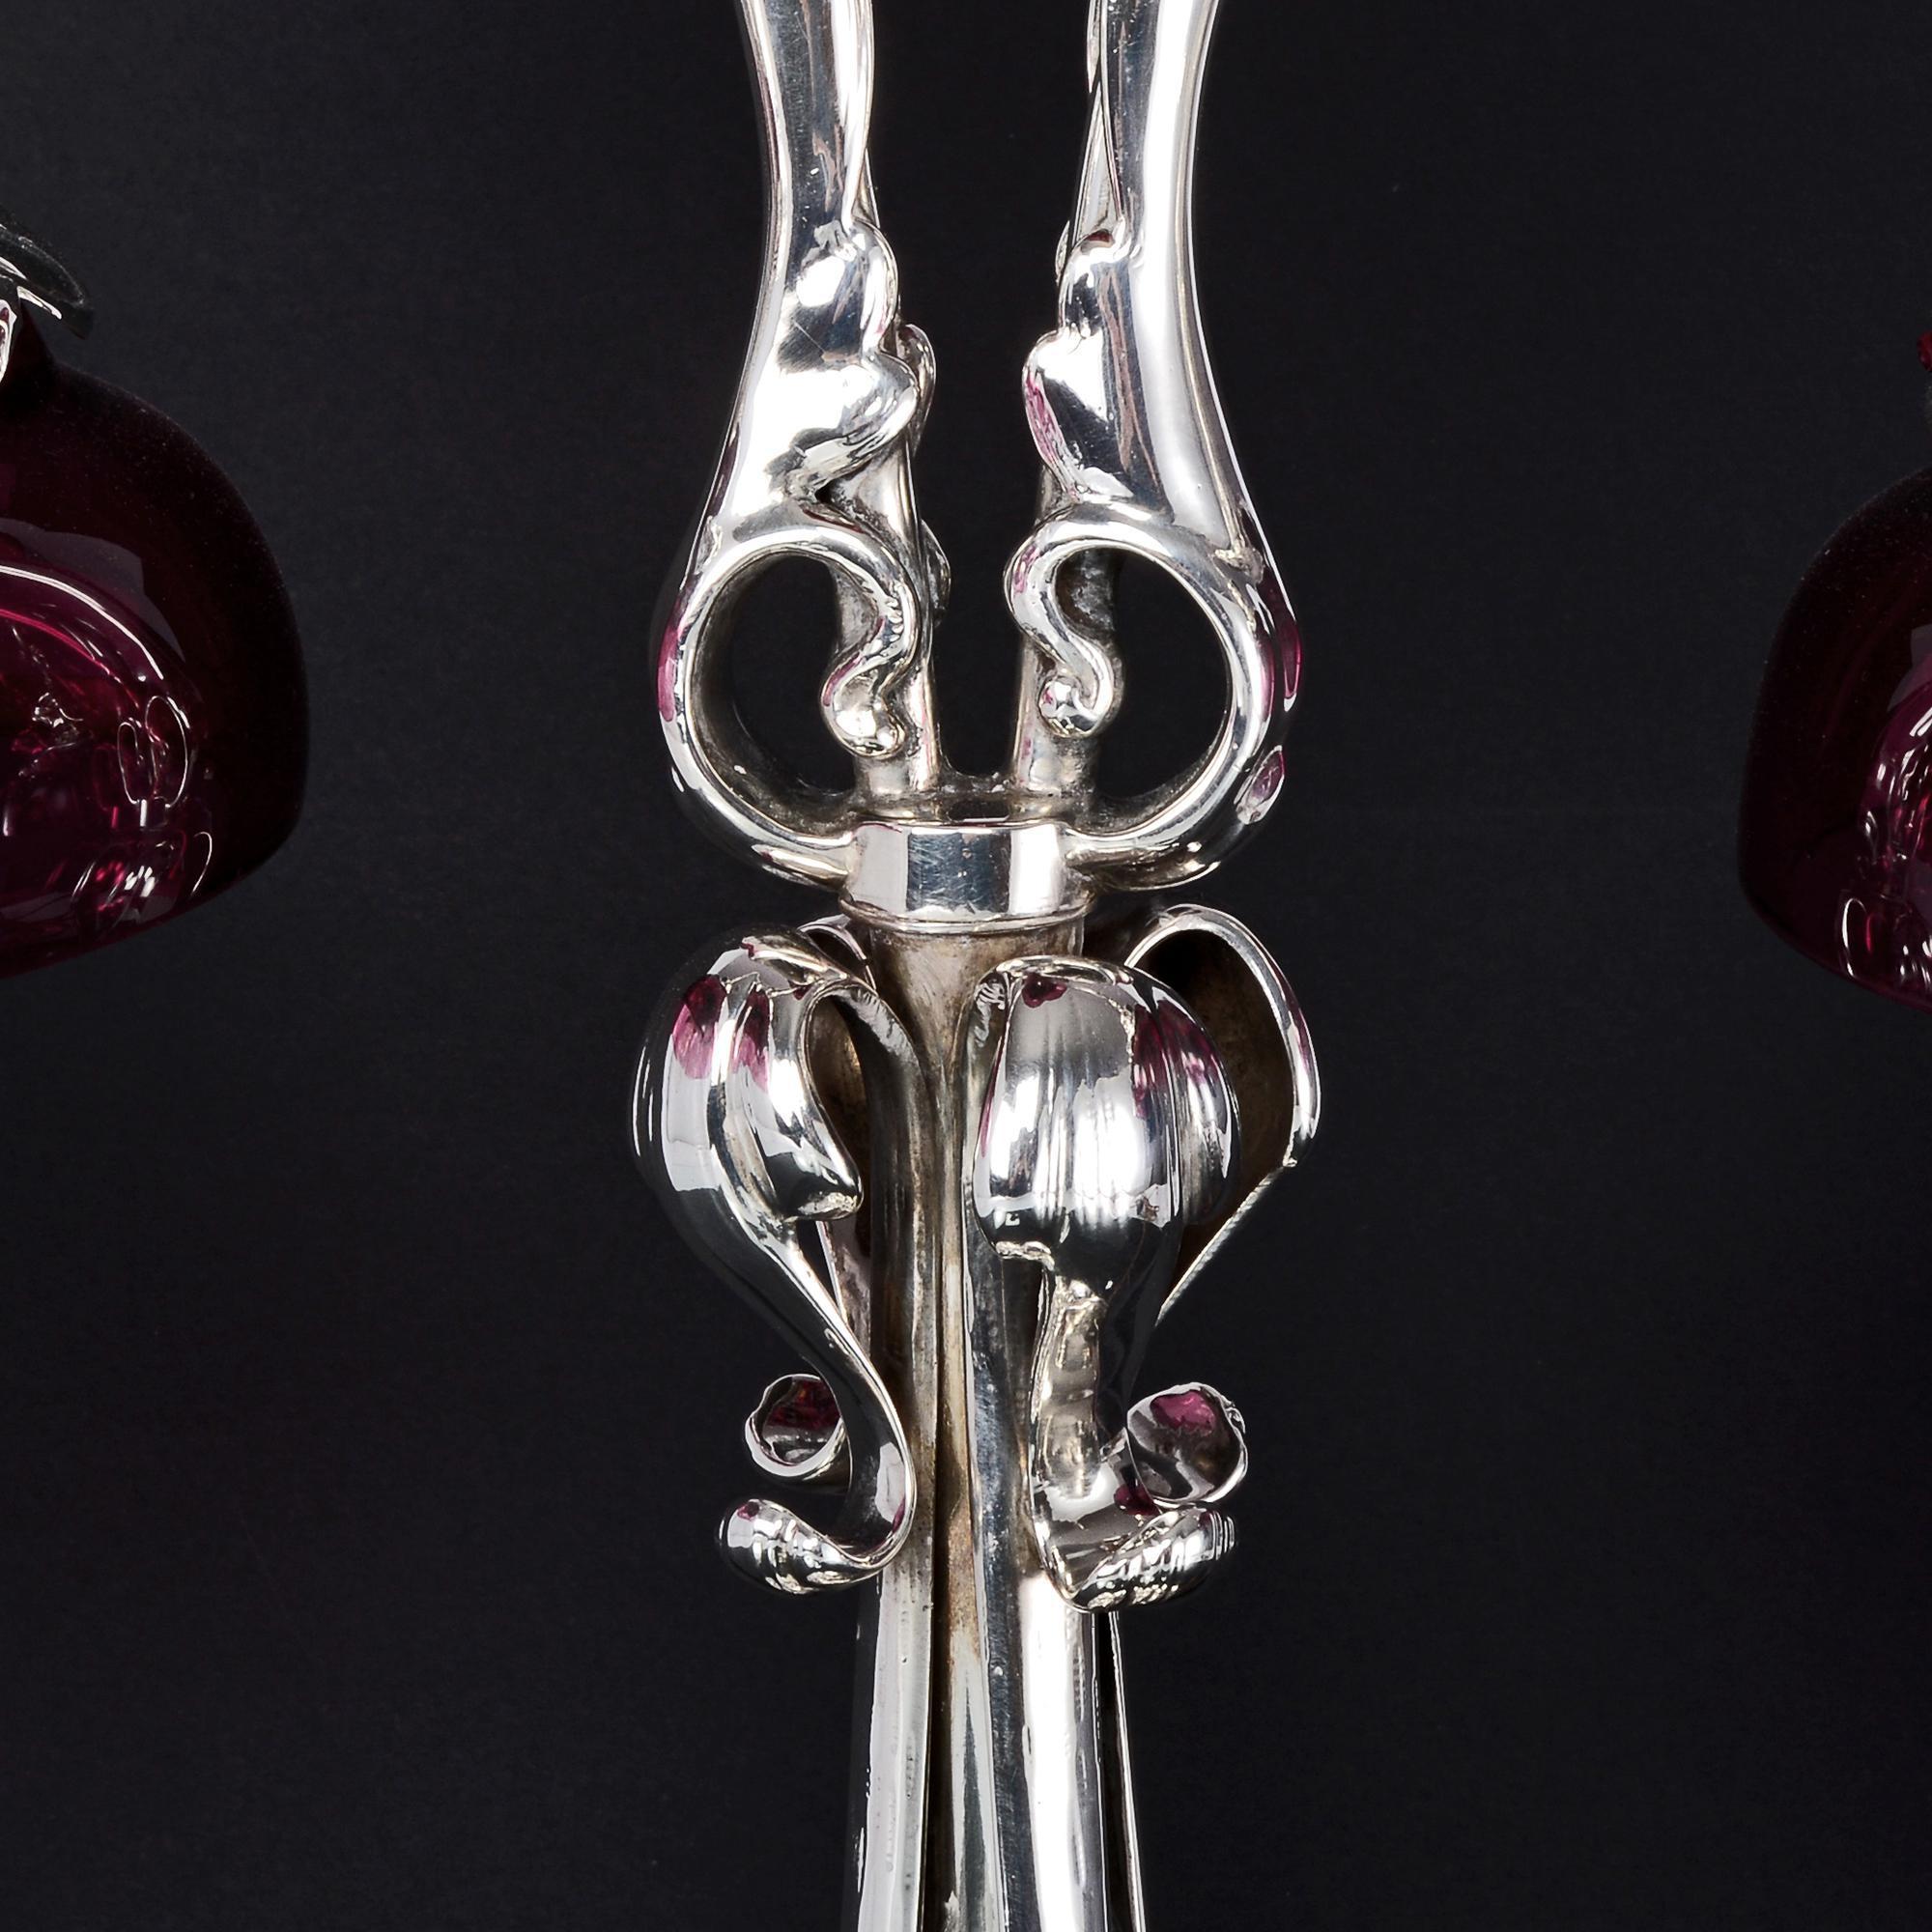 Seltene Jugendstil-Tischlampe aus Silber (Art nouveau) im Angebot